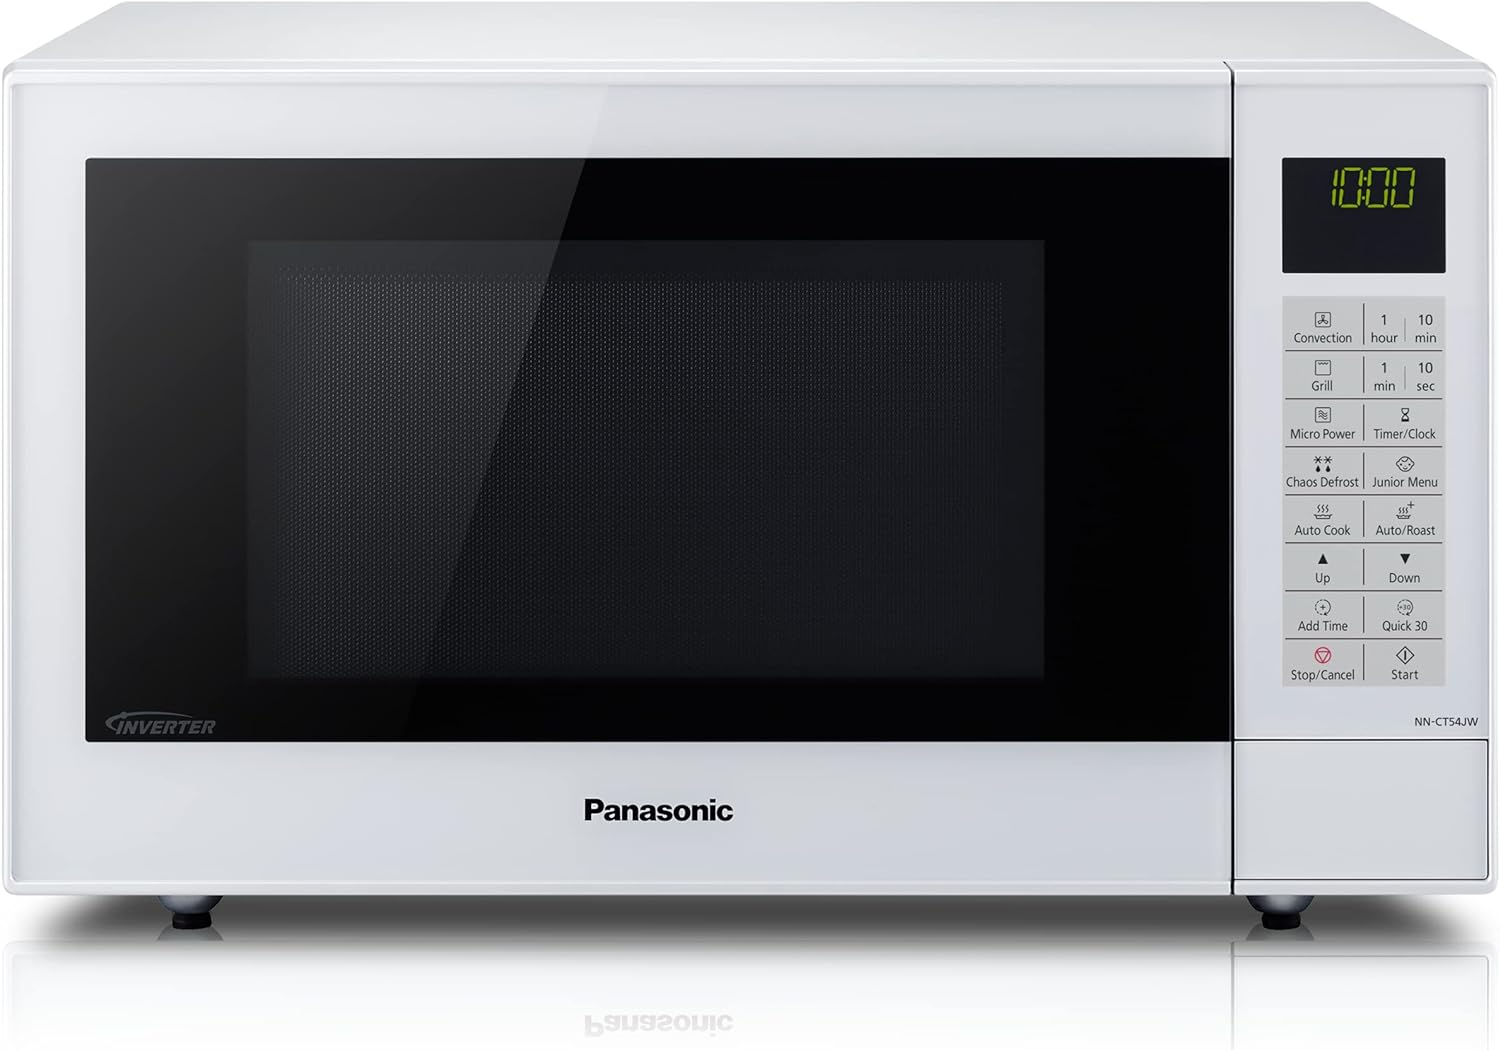 Panasonic CT54 Microwave Review